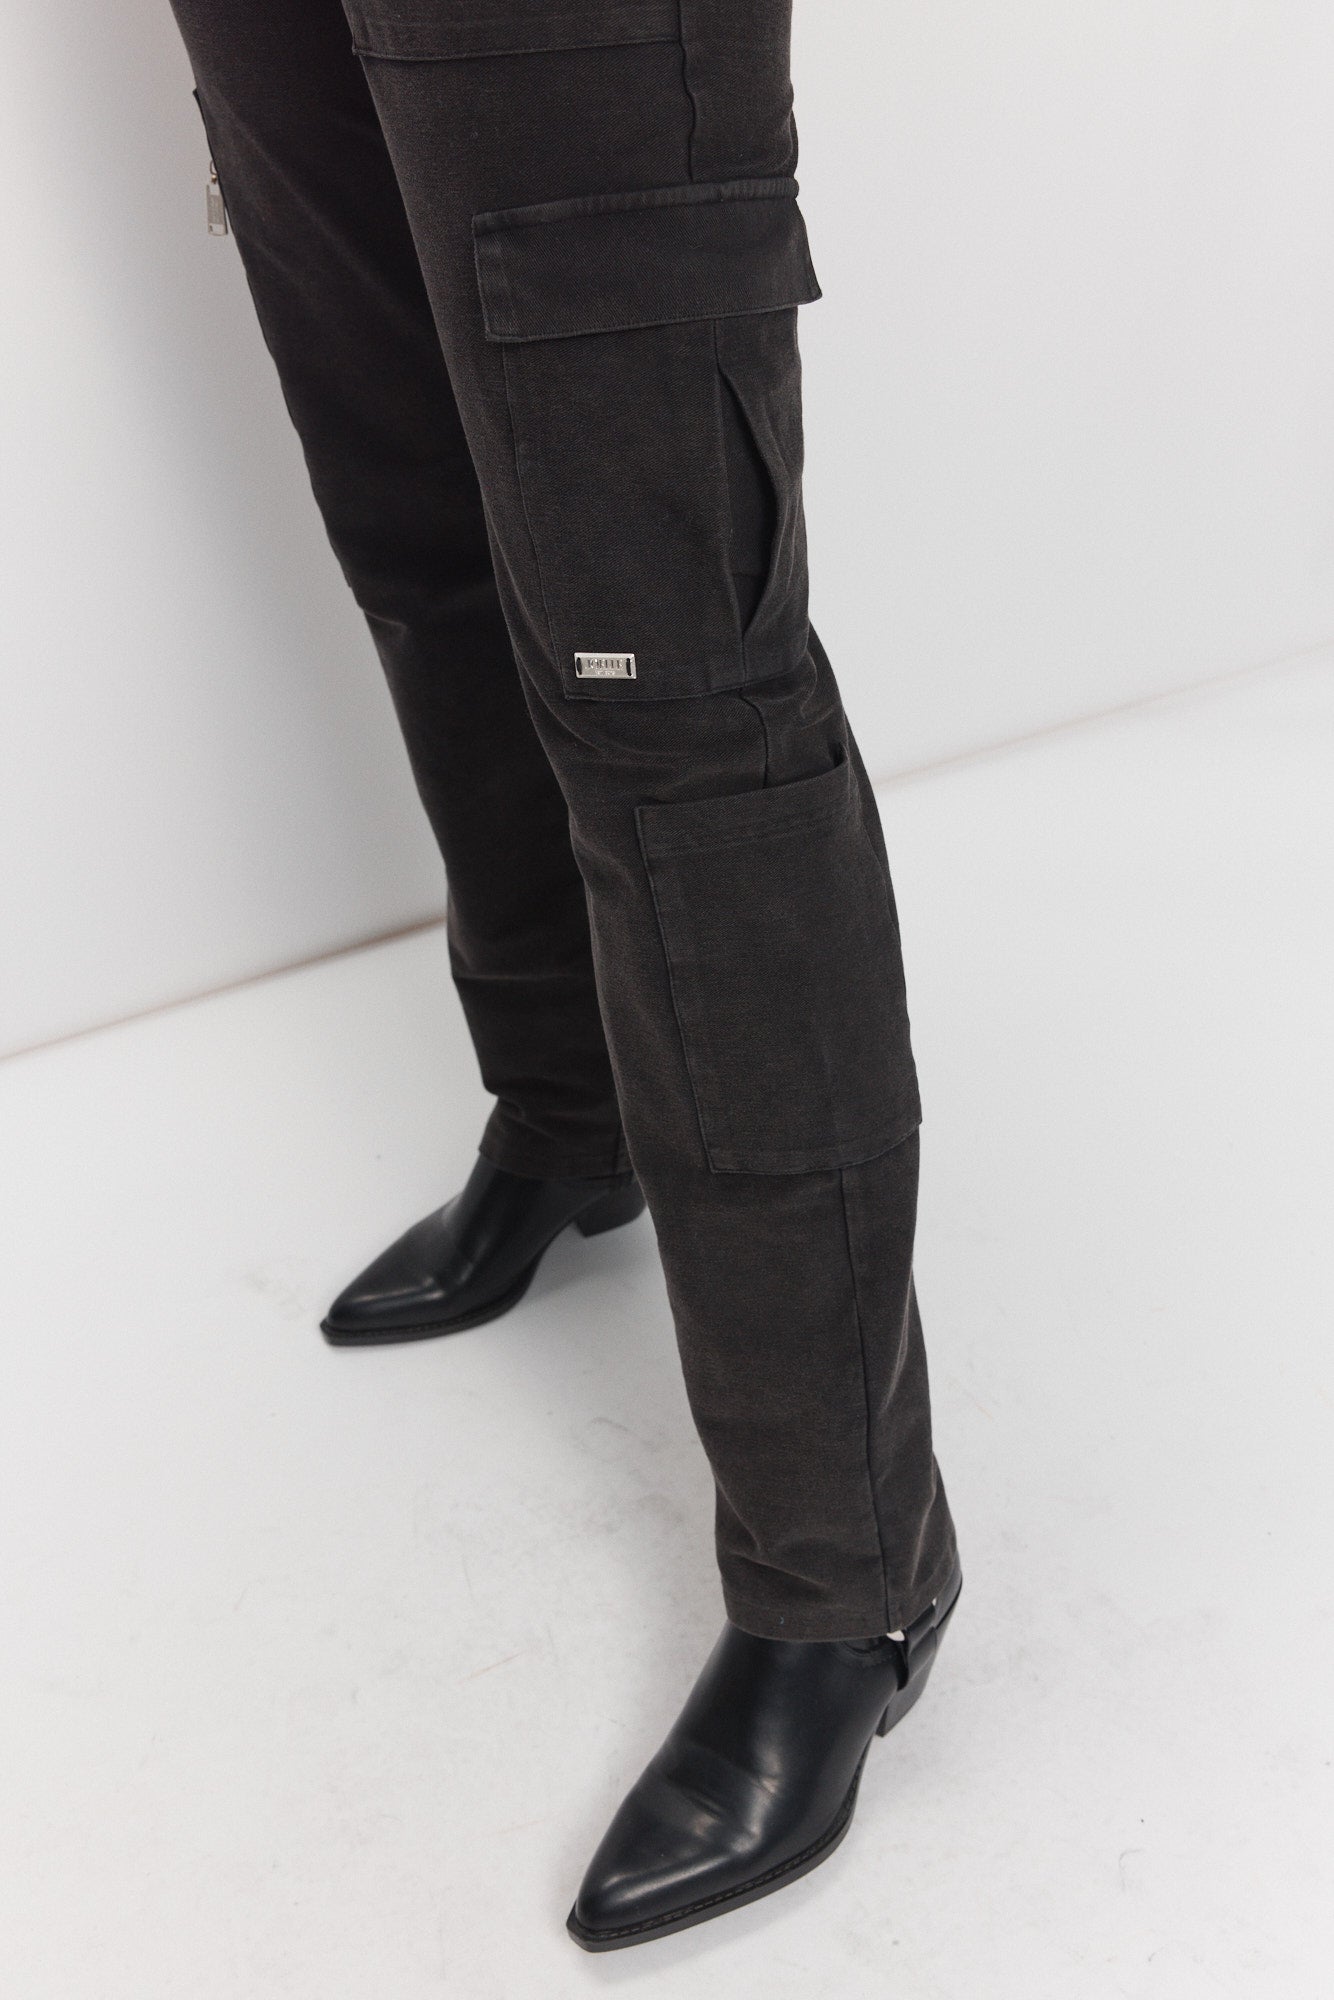 Pantalon gris tie-dye cargo style militaire | Pat